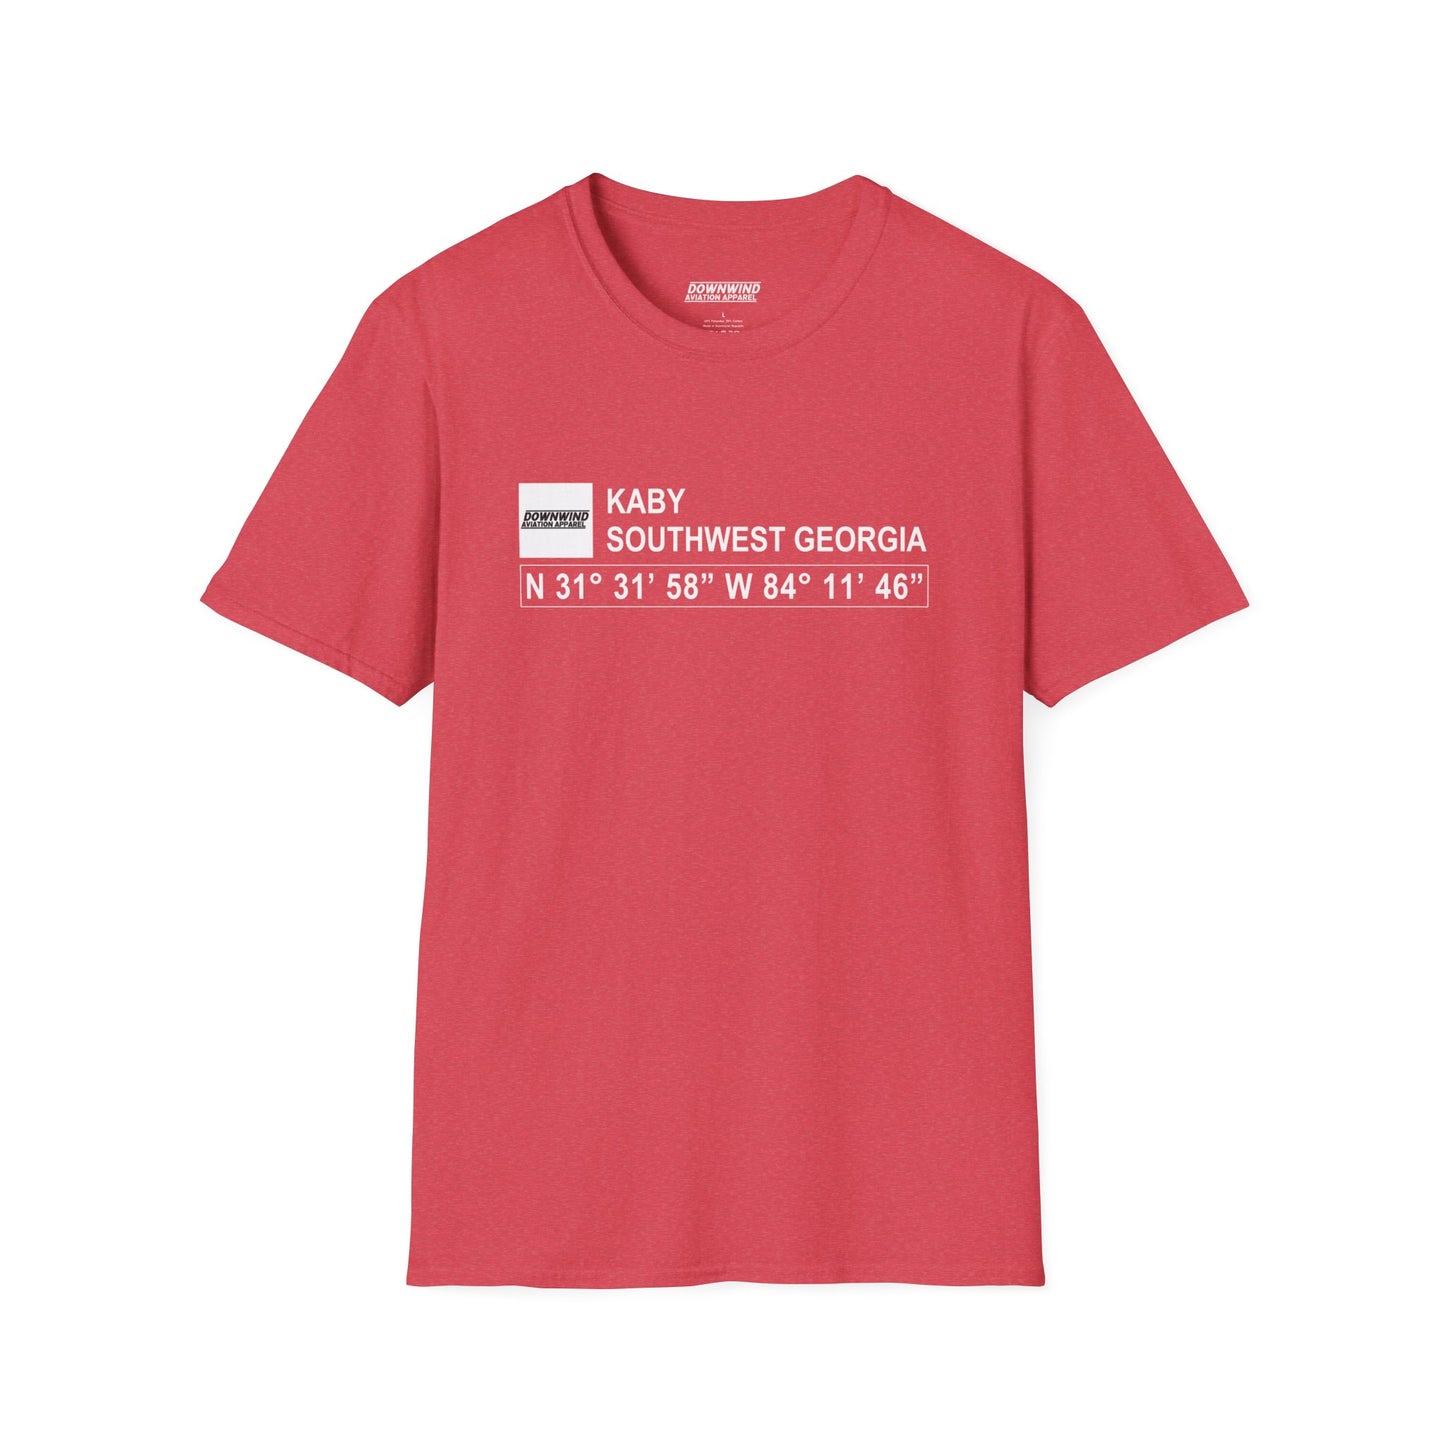 KABY / Southwest Georgia T-Shirt